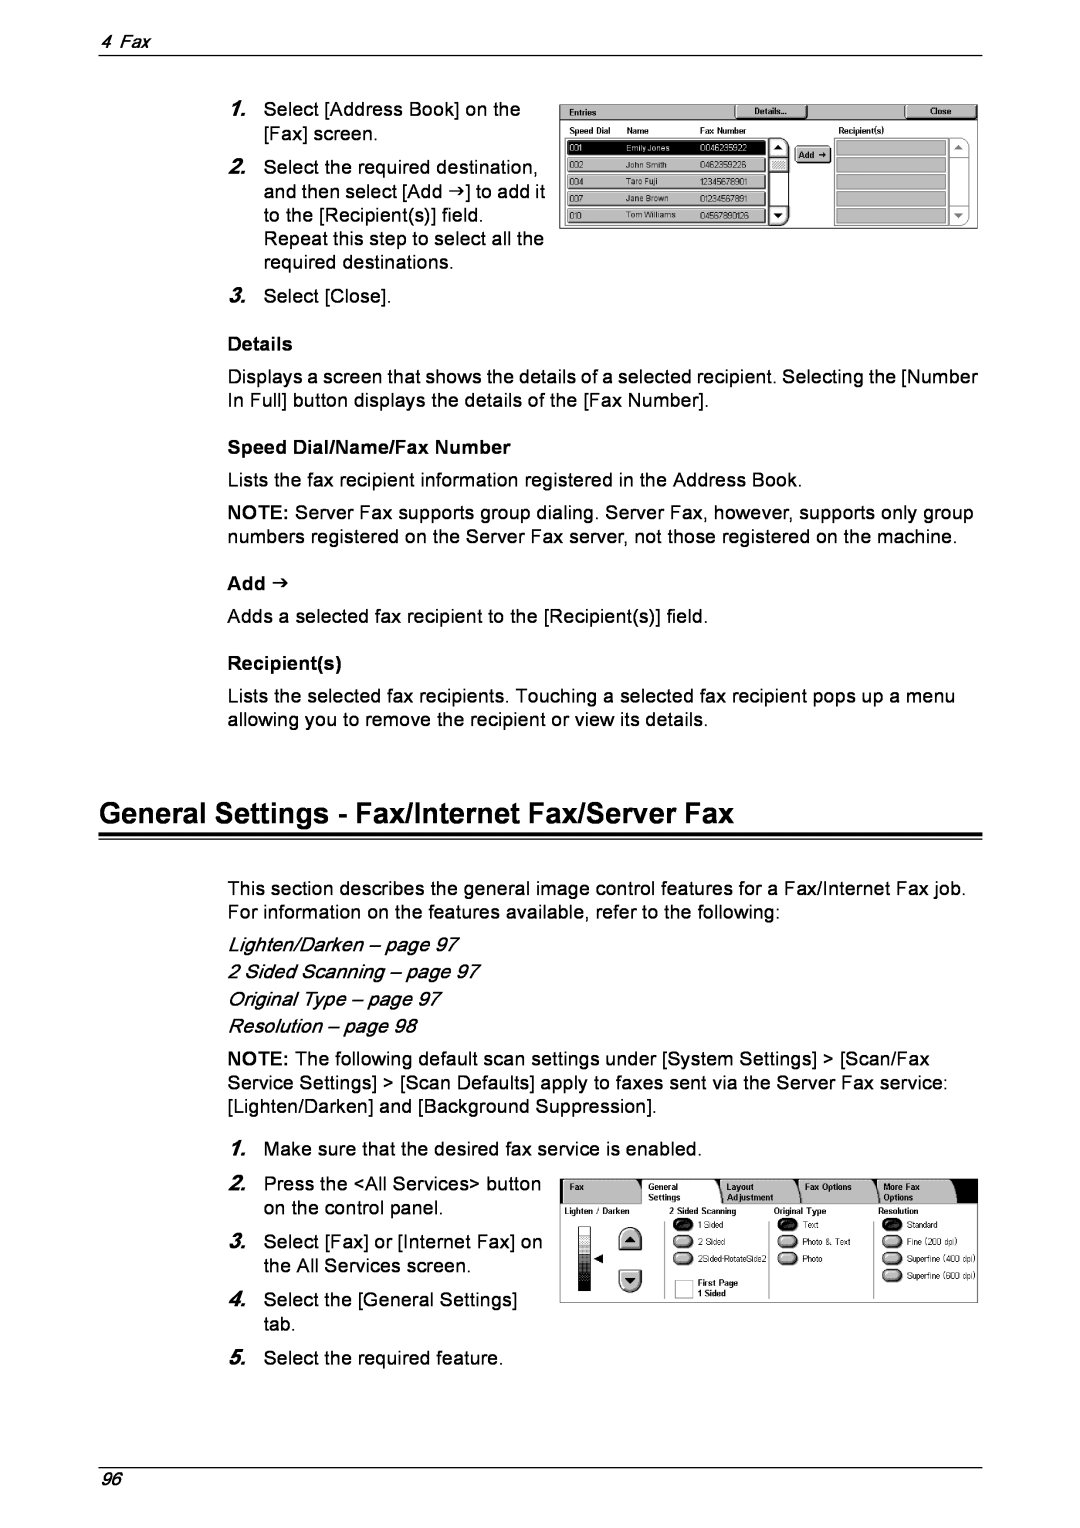 Xerox 5230 General Settings - Fax/Internet Fax/Server Fax, Lighten/Darken – page, Details, Speed Dial/Name/Fax Number 